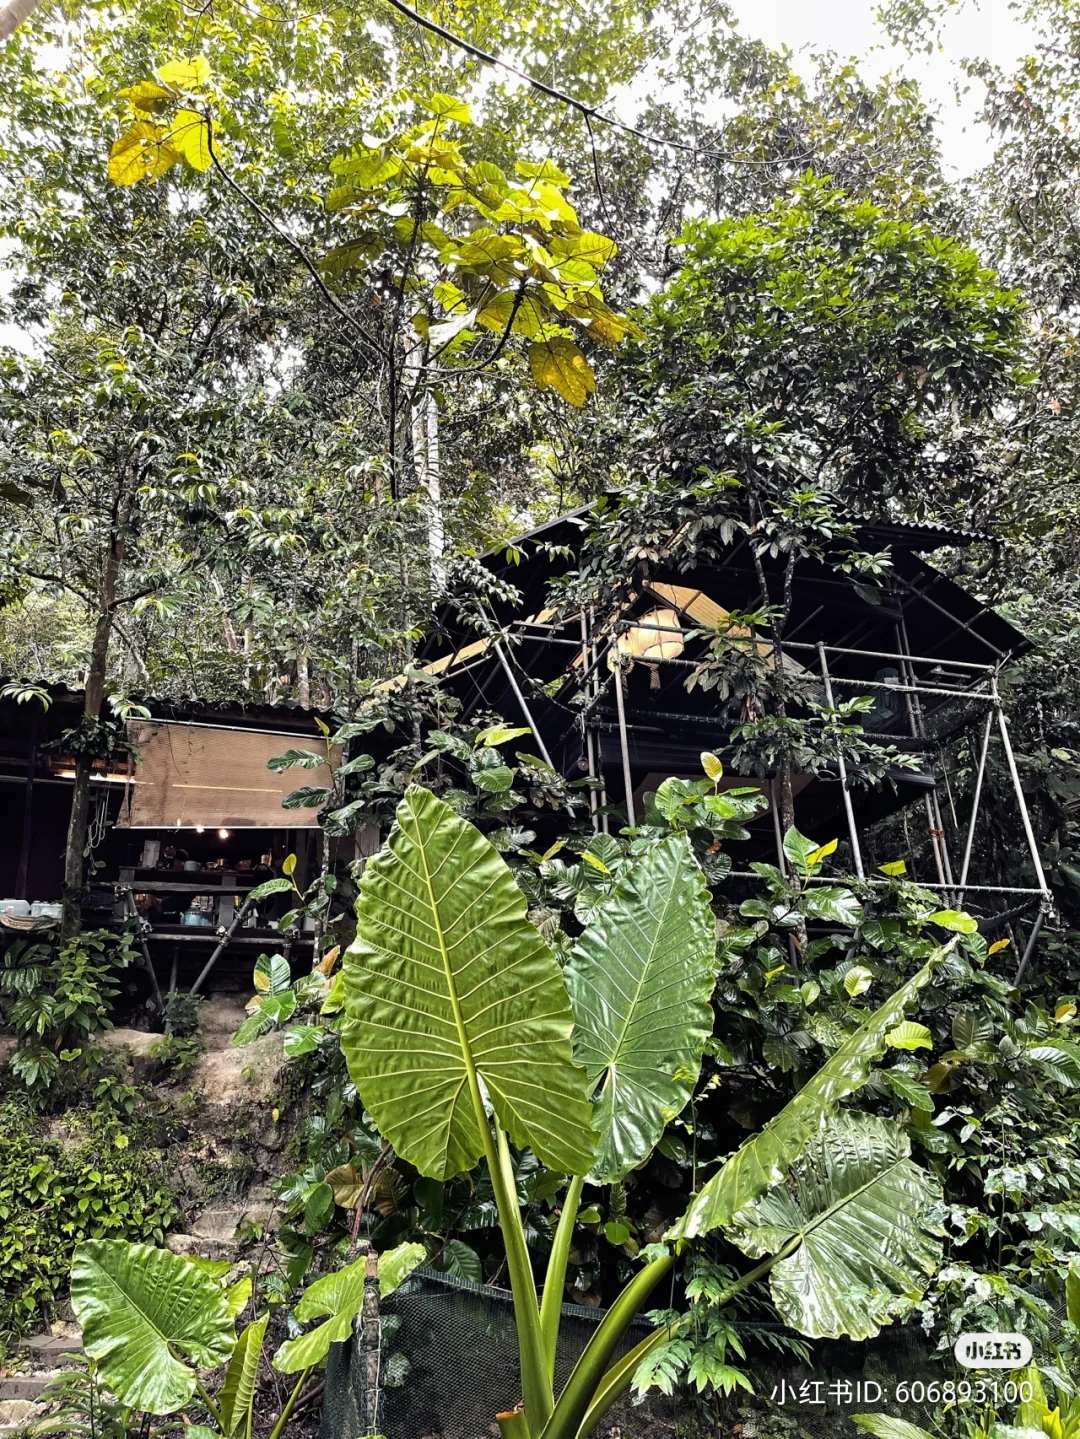 Rainforest Treehouse Cafe